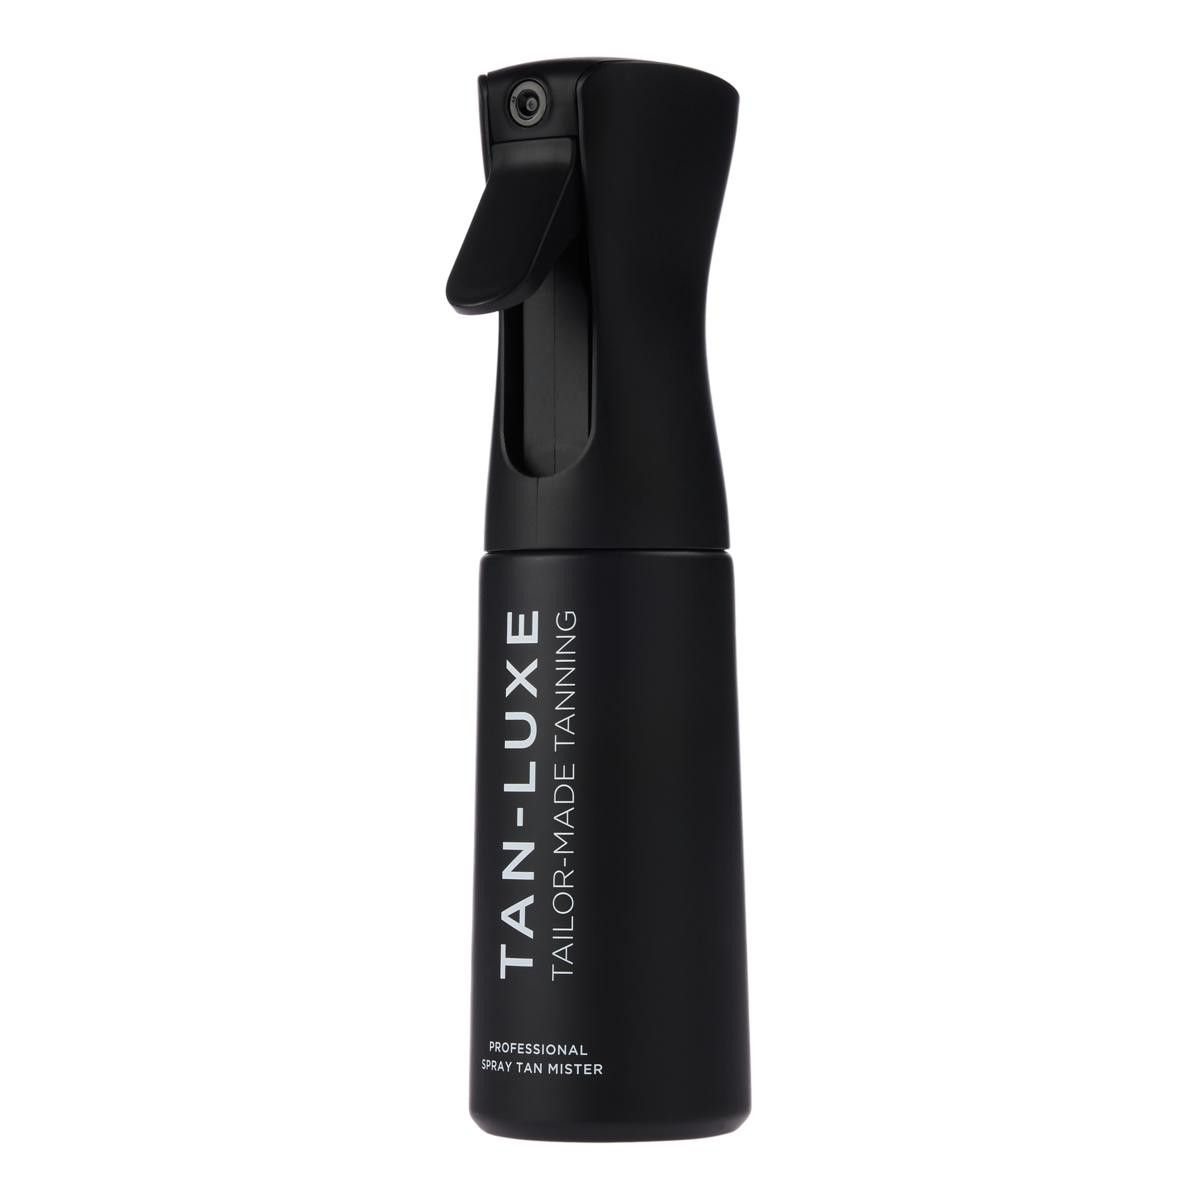 Tan-Luxe Self-Tanning Airbrush Spray Tan Mister | HSN